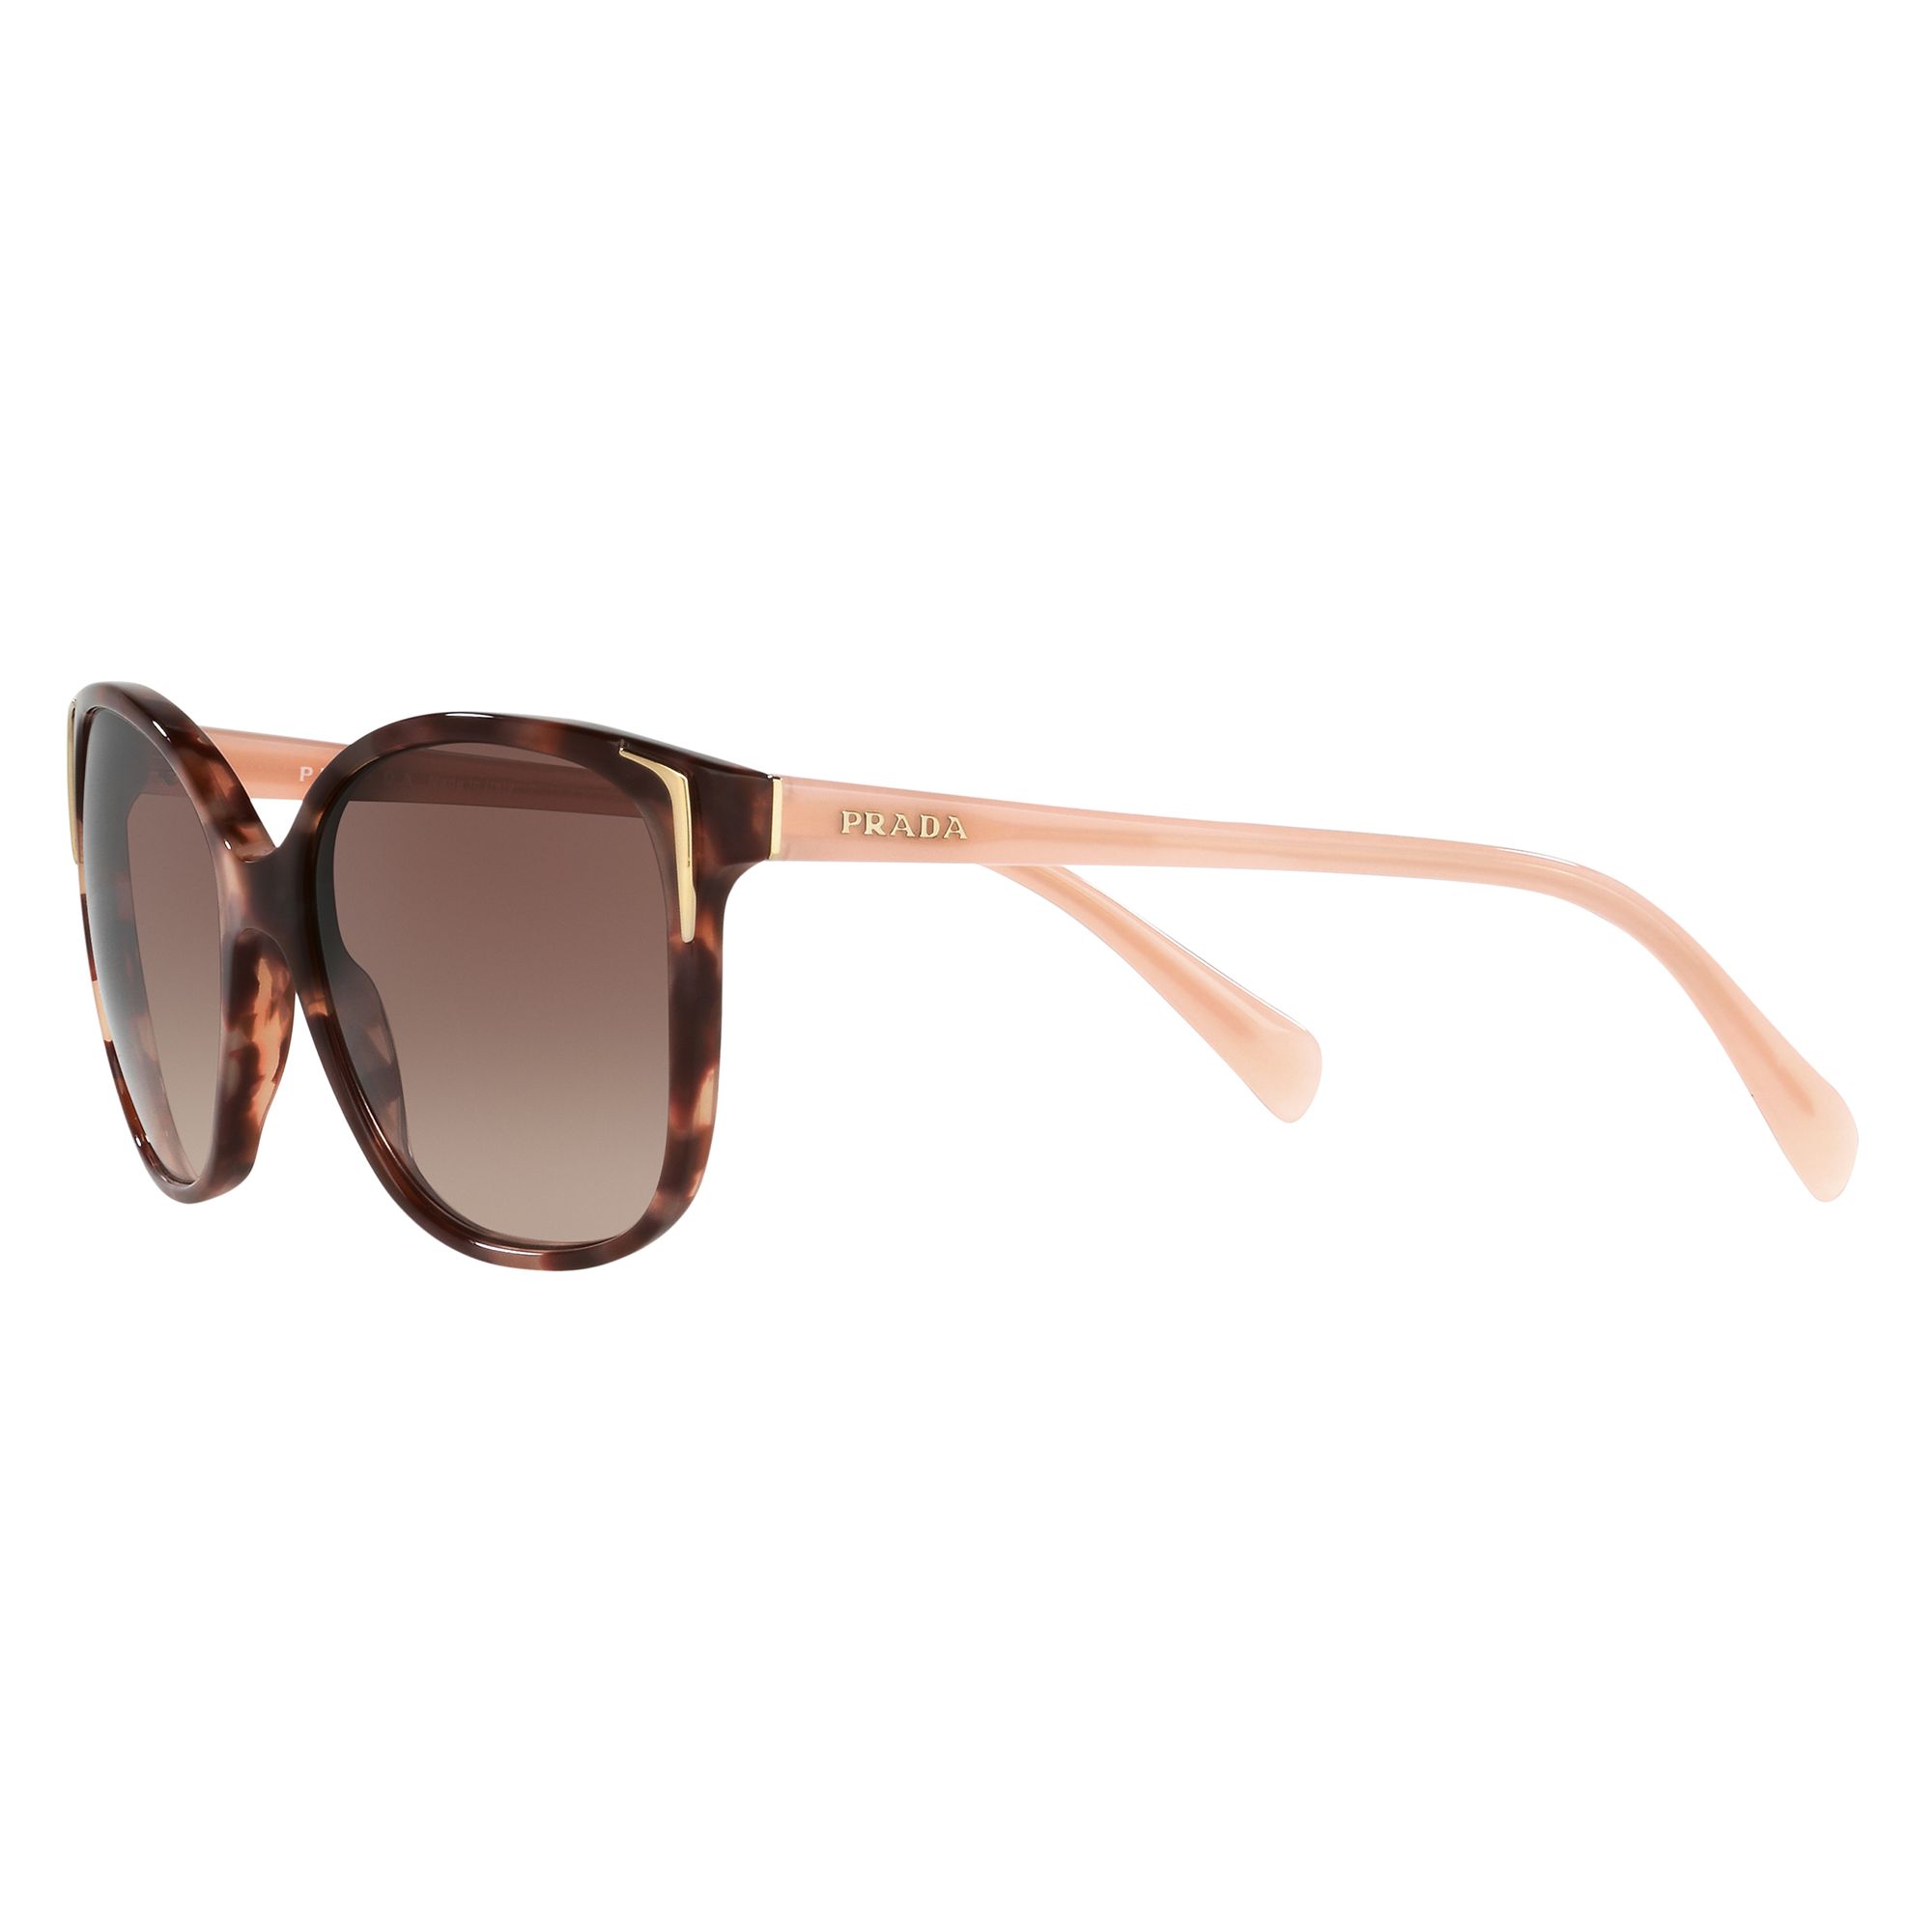 Prada PR 01OS Square Sunglasses, Tortoise Blush/Brown Gradient